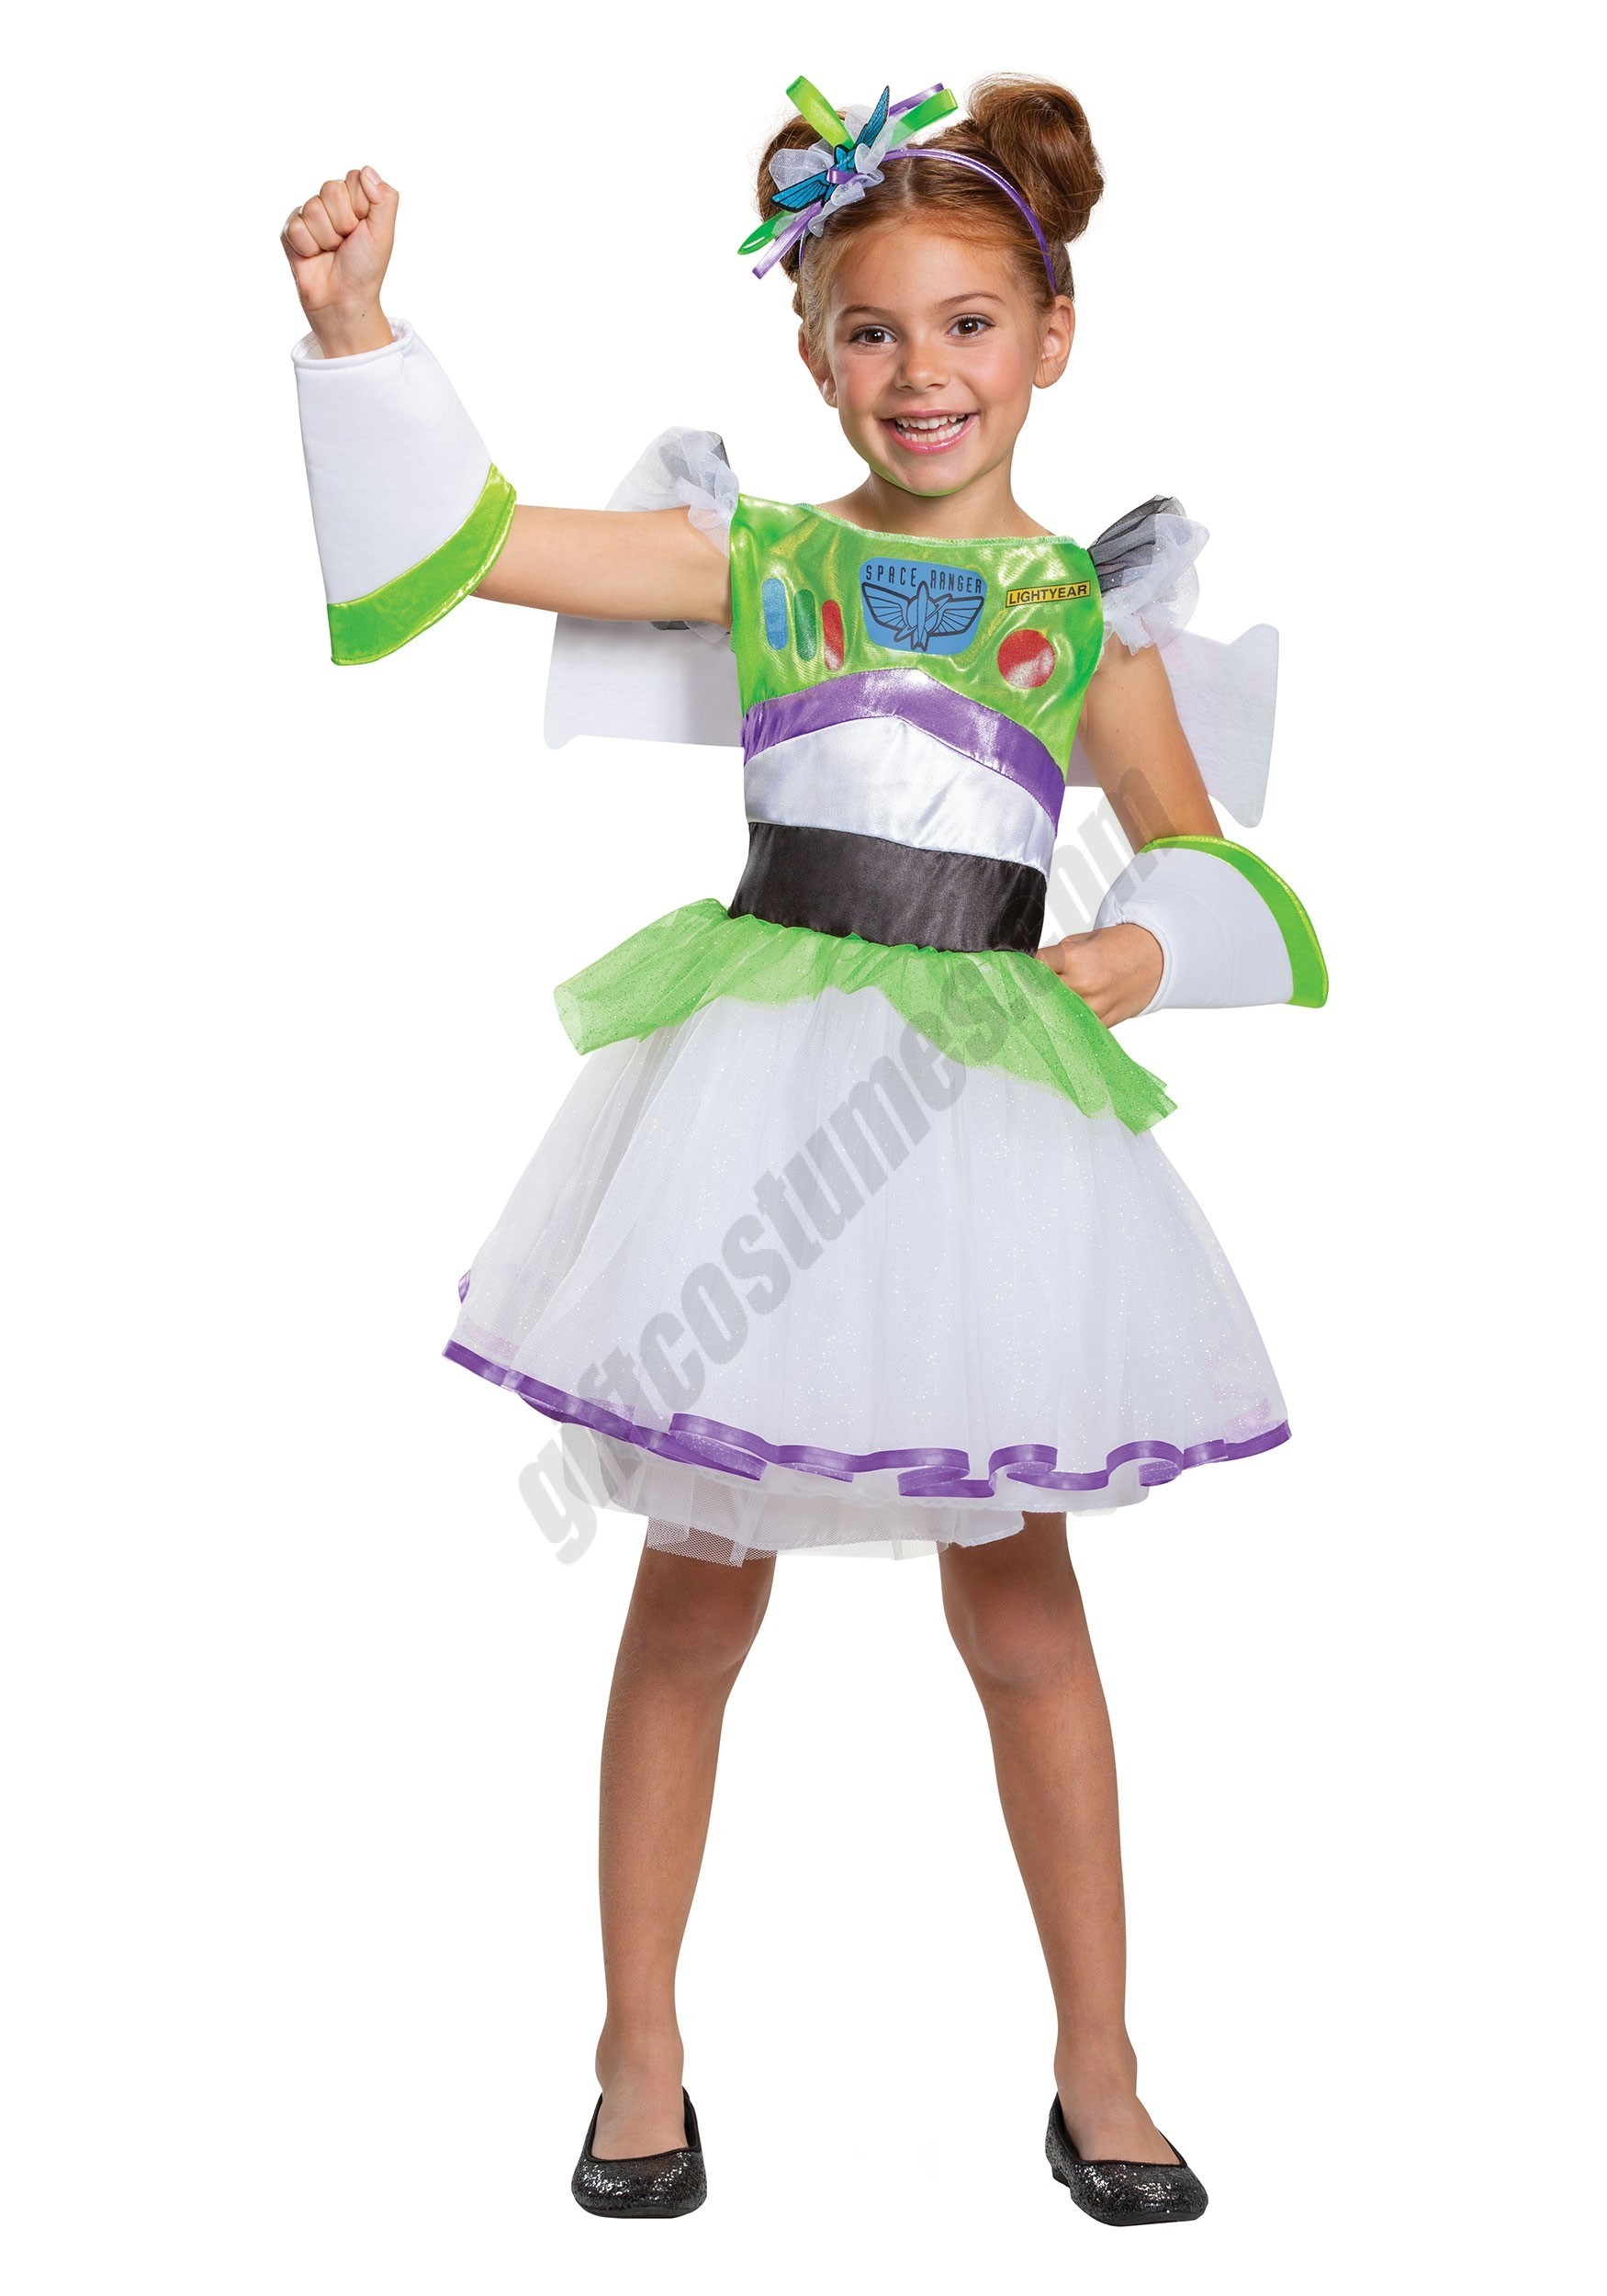 Toy Story Girls Buzz Lightyear Tutu Costume Promotions - Toy Story Girls Buzz Lightyear Tutu Costume Promotions